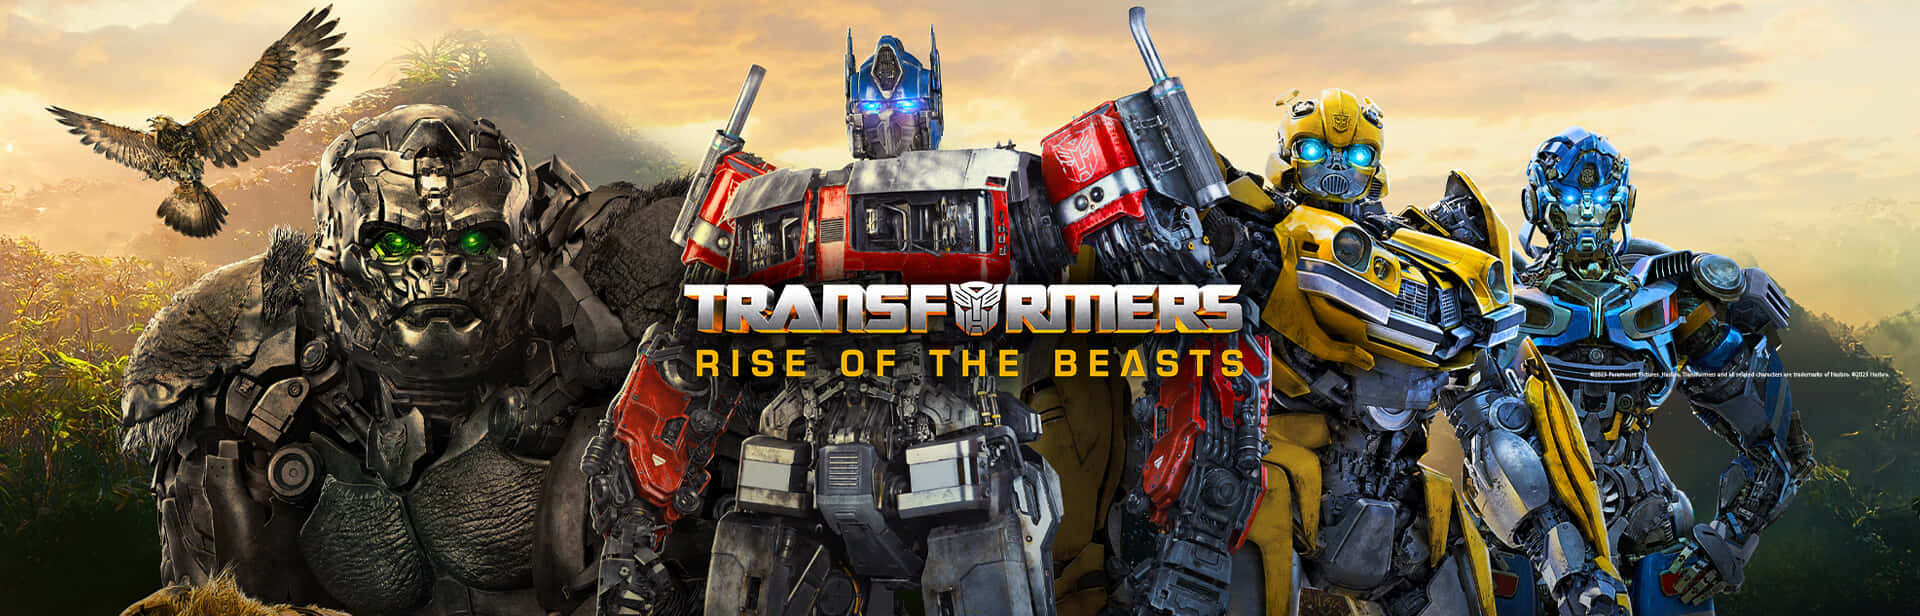 Transformers Riseofthe Beasts Official Artwork Wallpaper